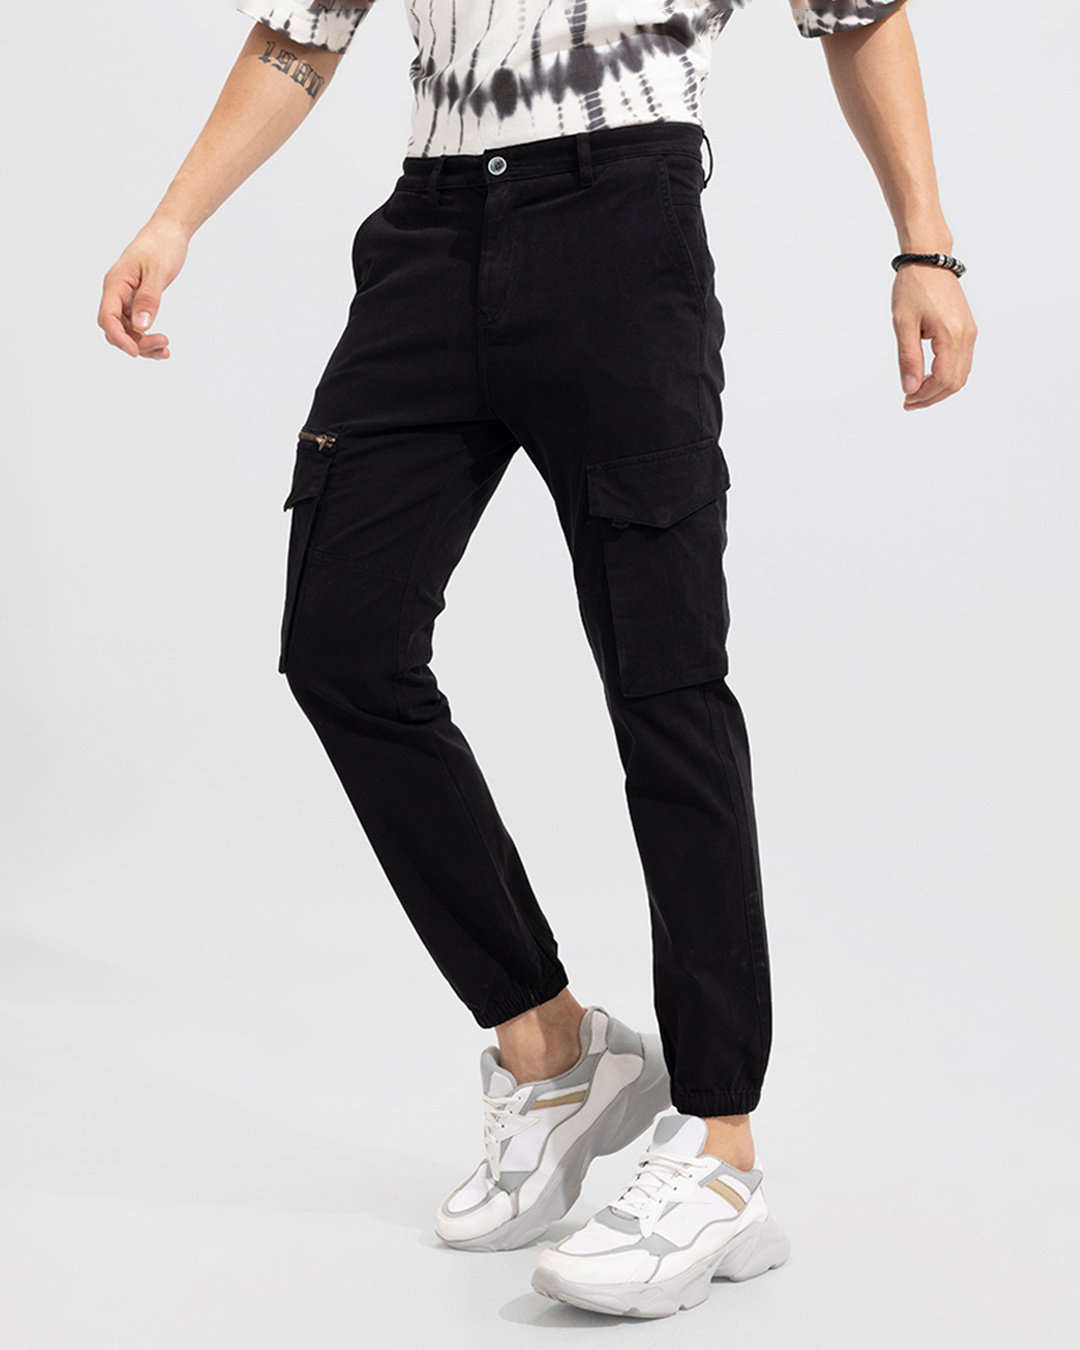 Buy Black Trousers  Pants for Women by SUPERDRY Online  Ajiocom